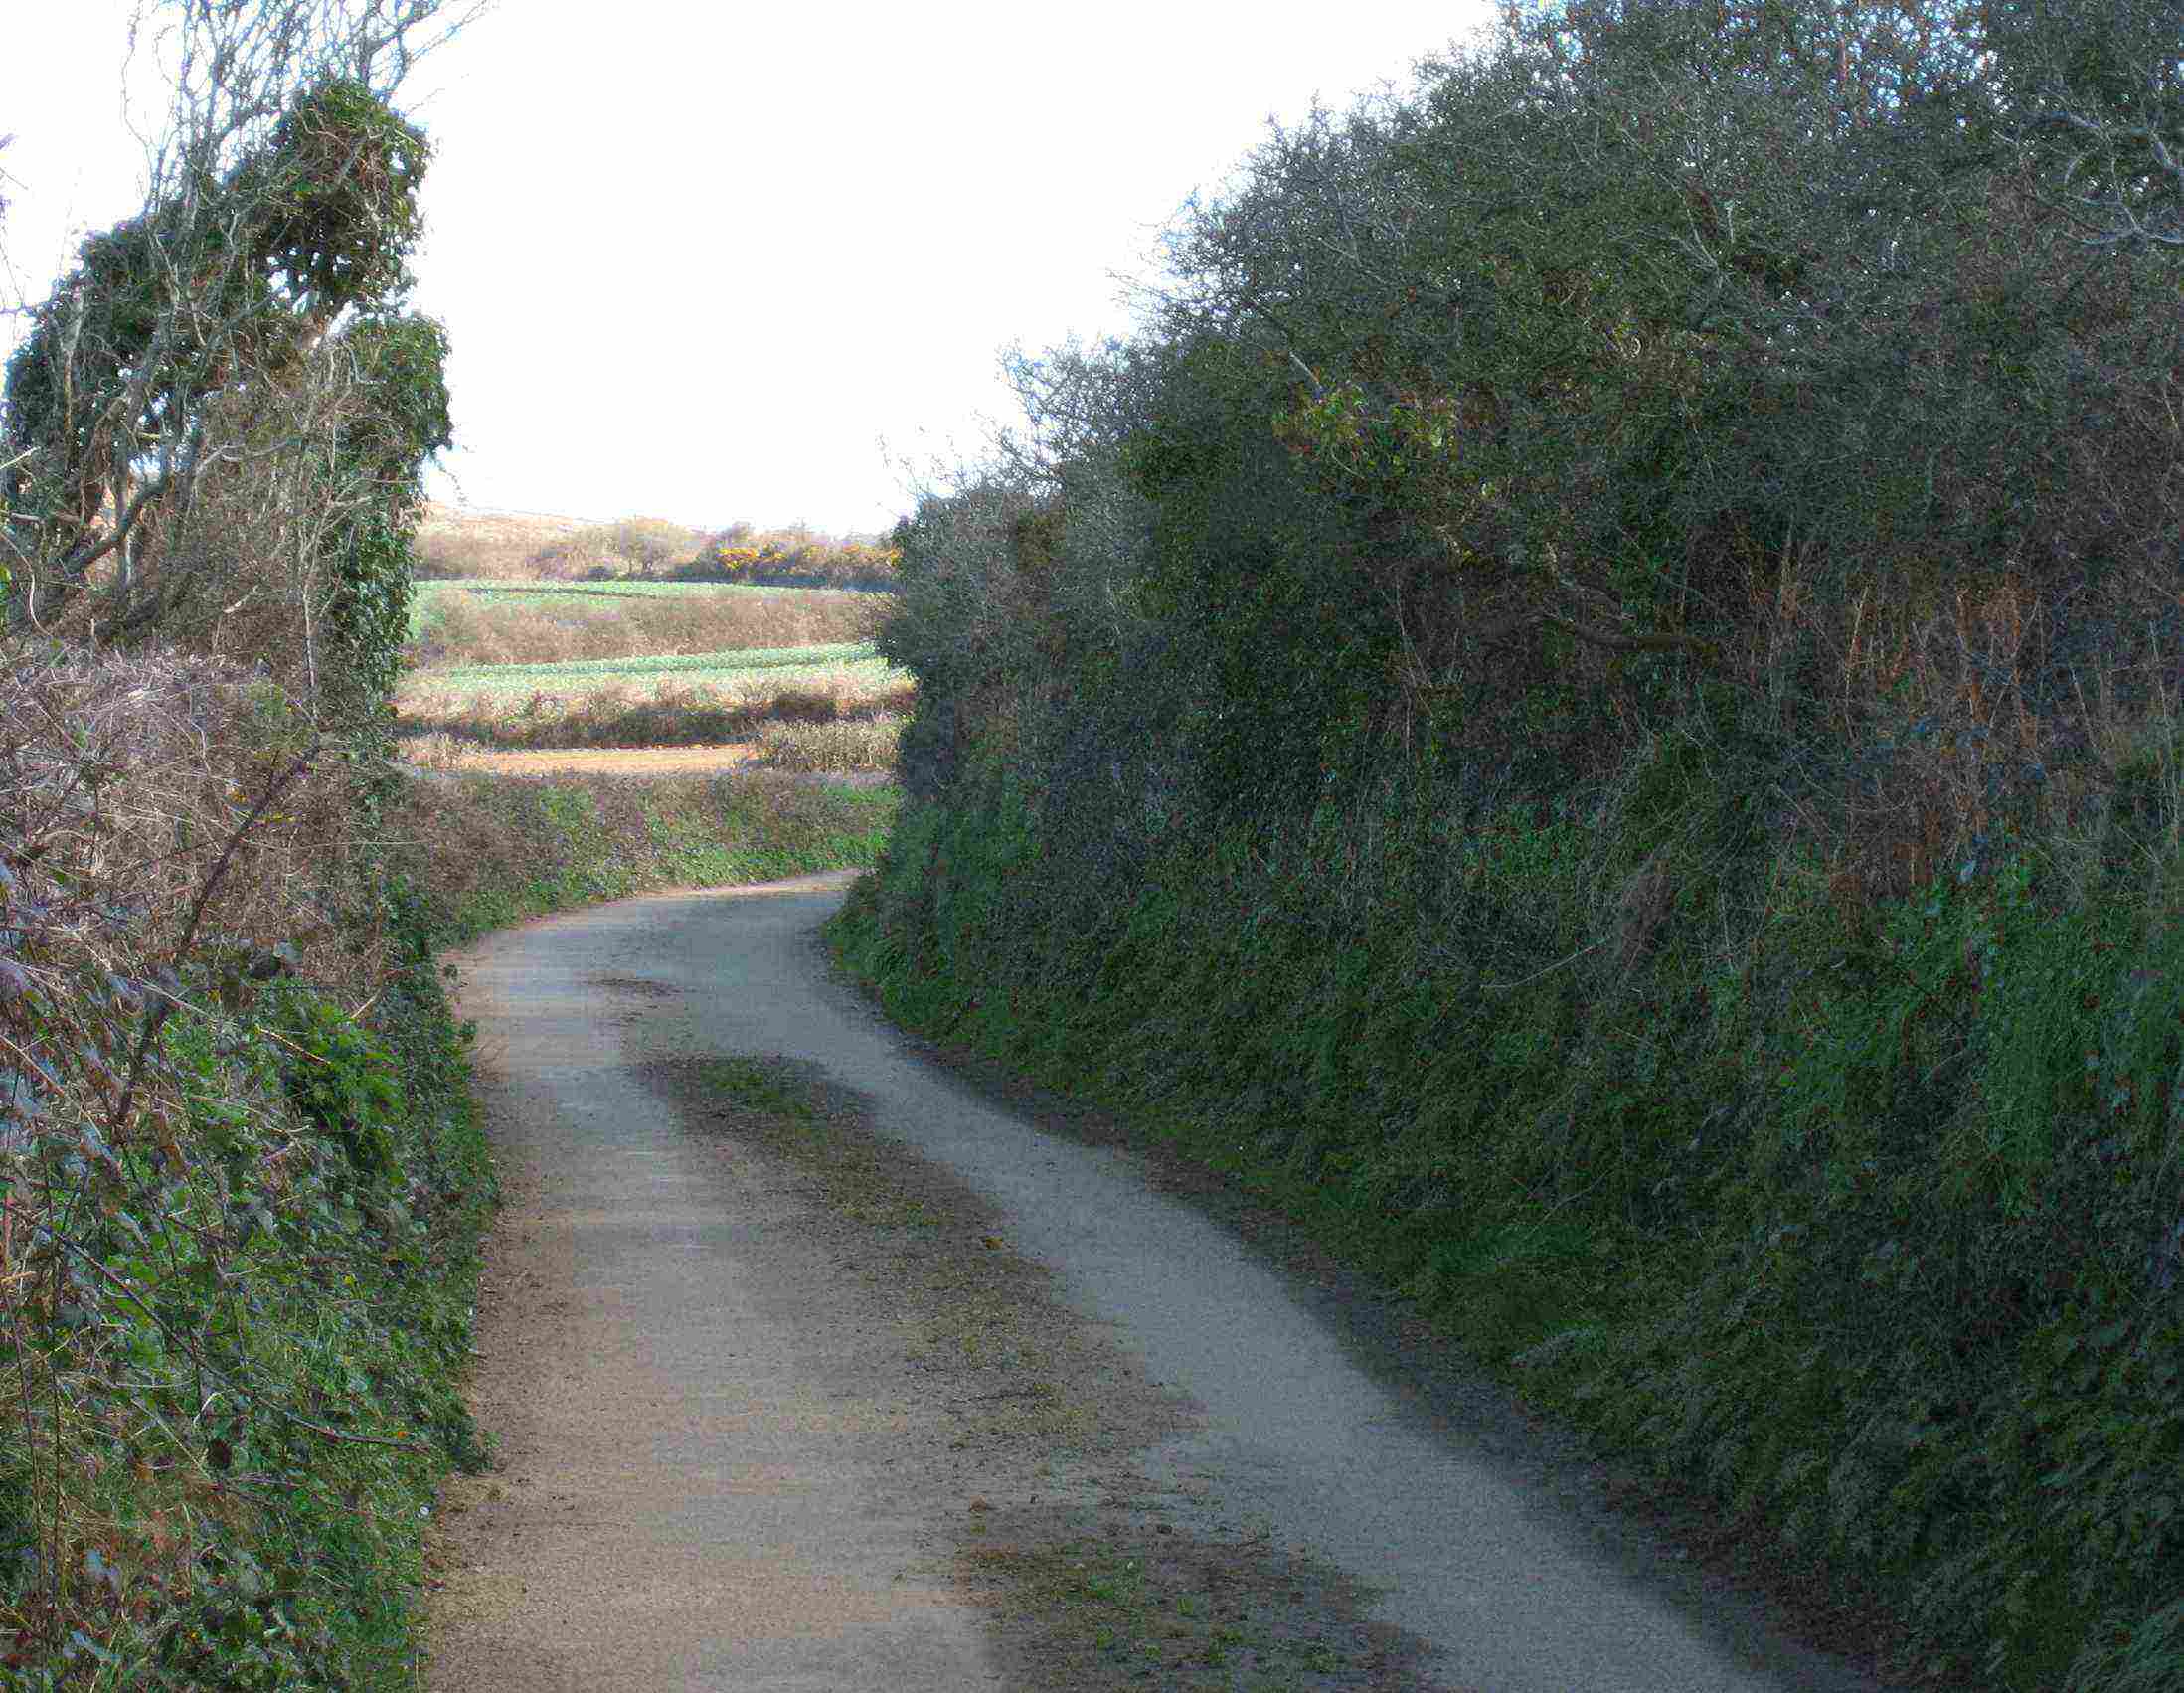 DN2 Typical Cornish lane